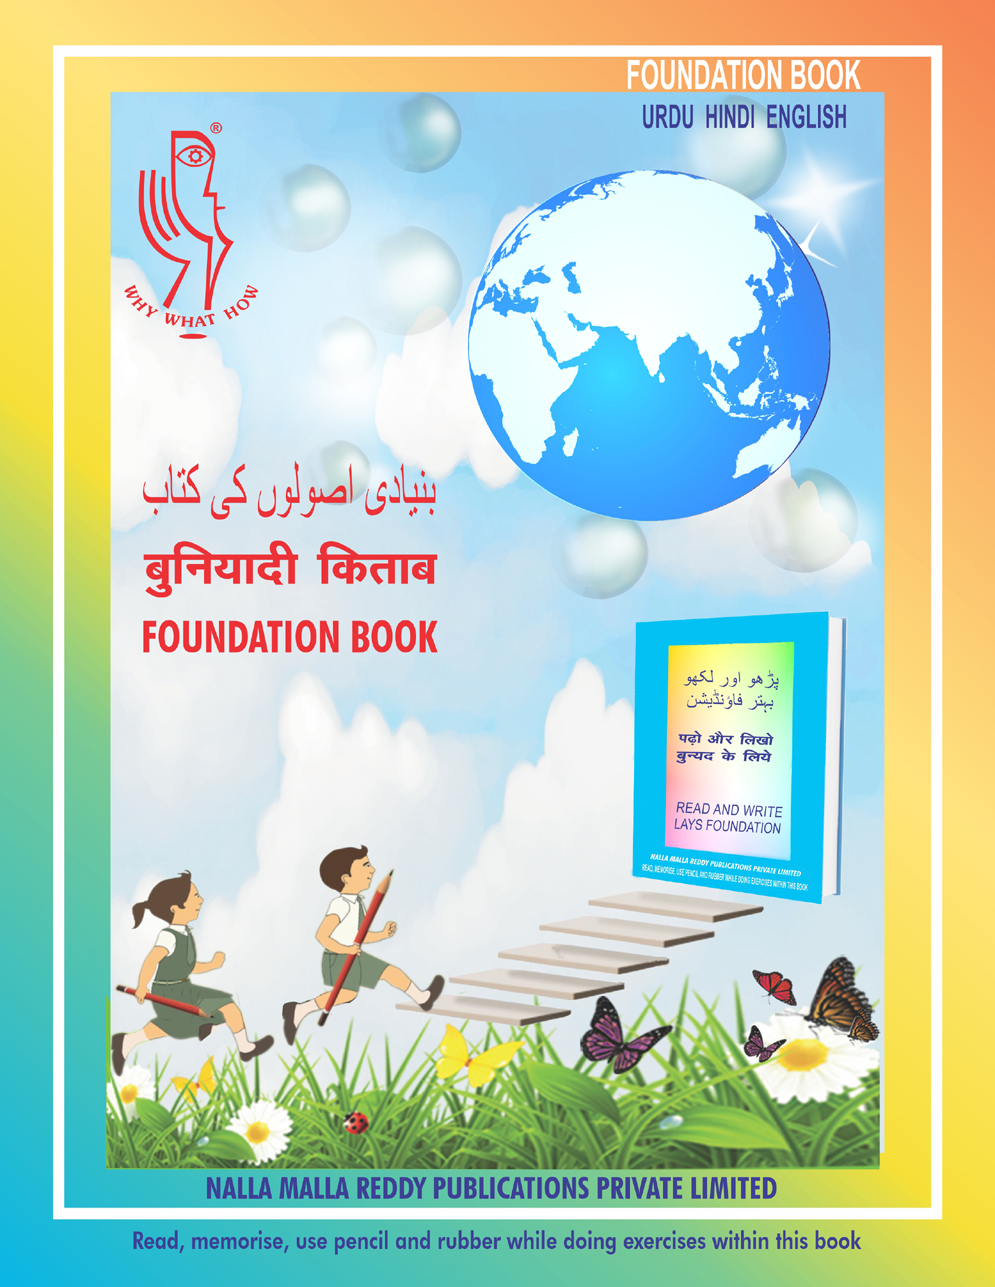 Urdu Hindi English Foundation Book Tittle website